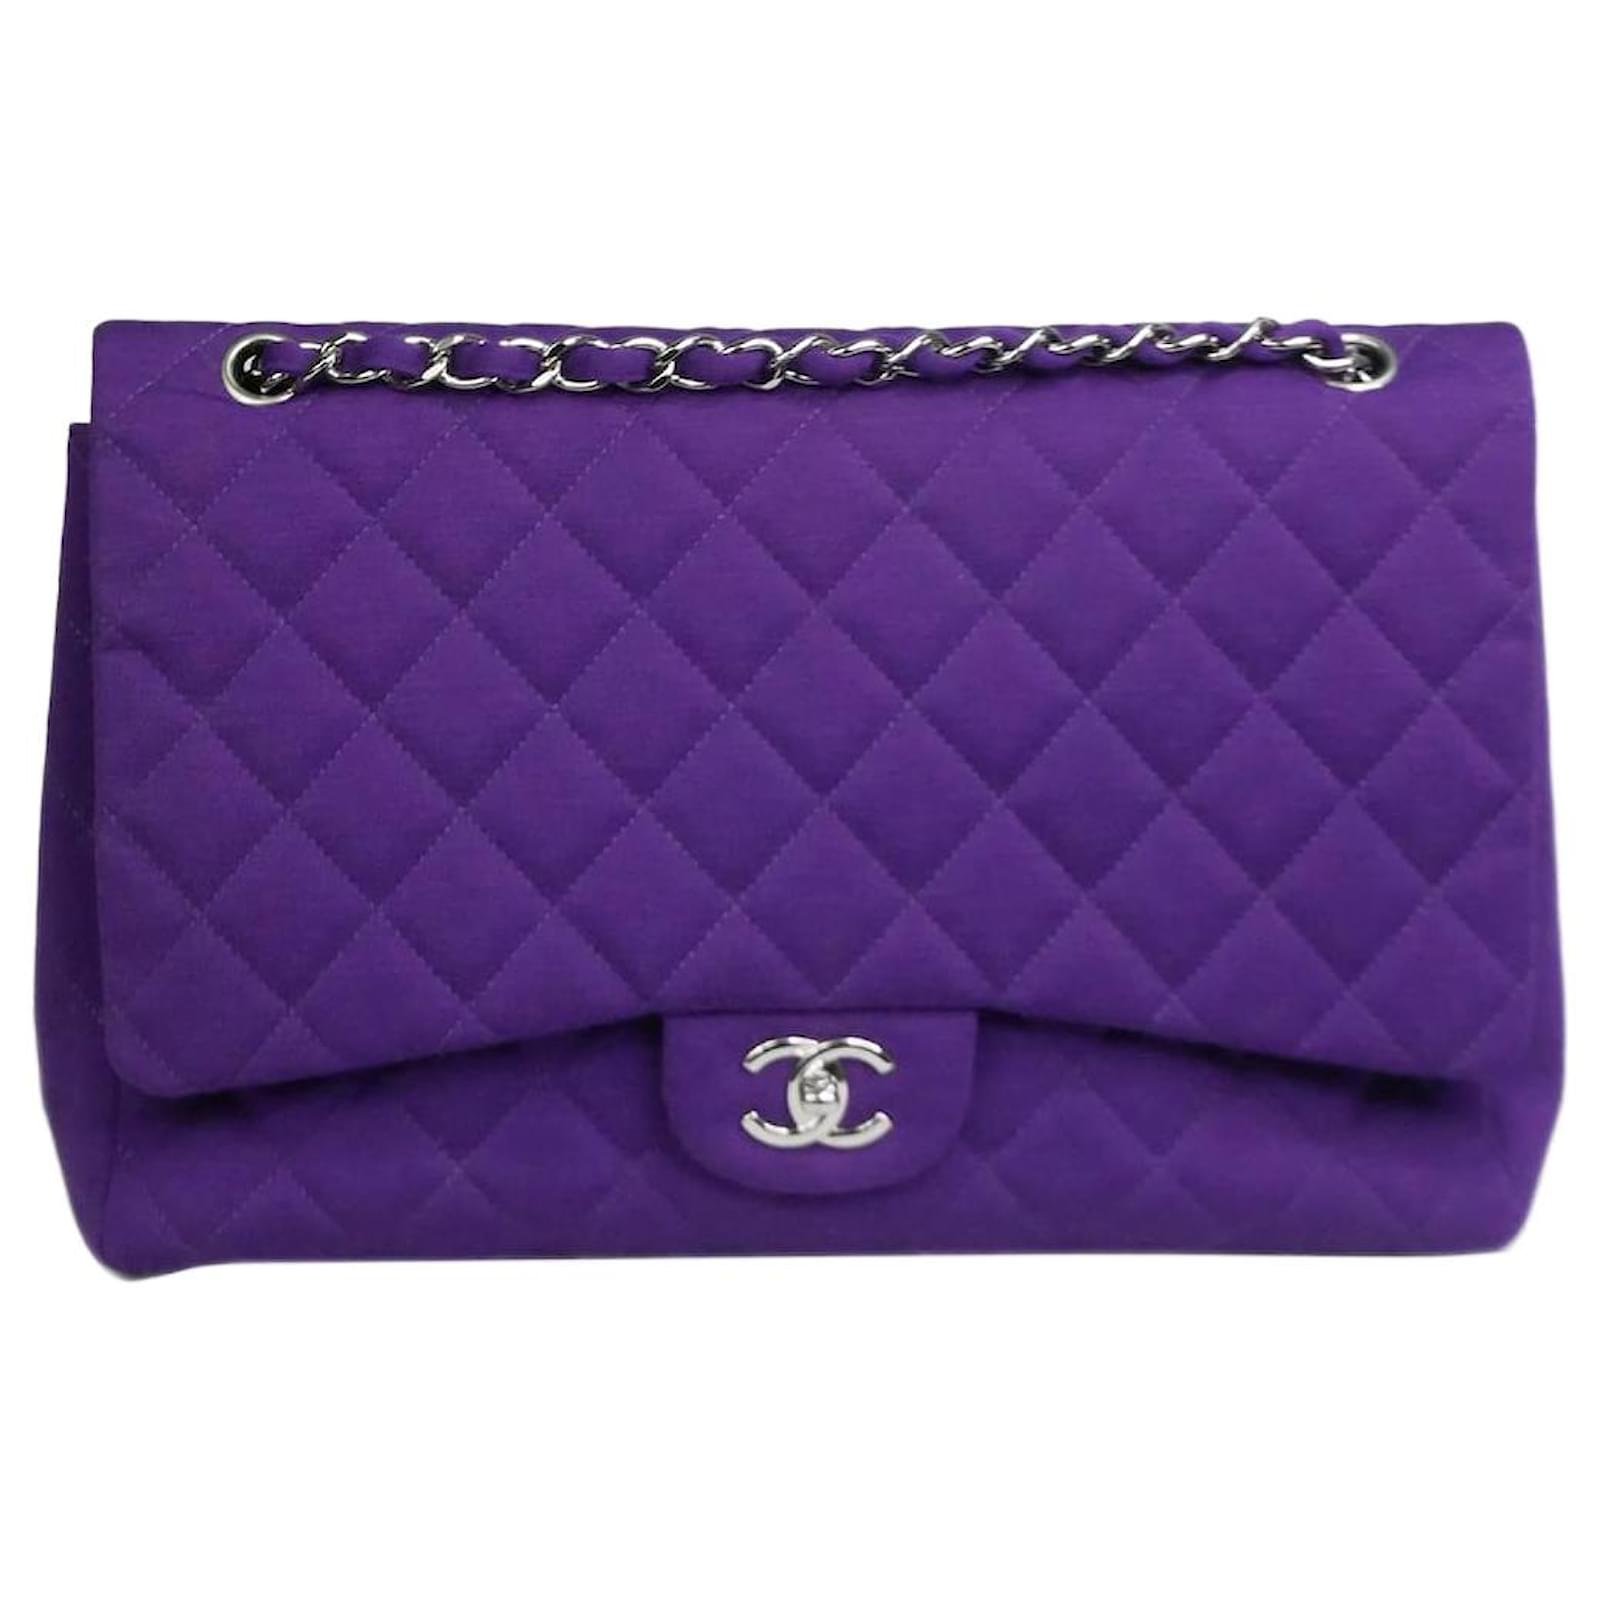 Handbags Chanel Purple 2009-2010 Maxi Canvas Classic Single Flap Silver Hardware Shoulder Bag